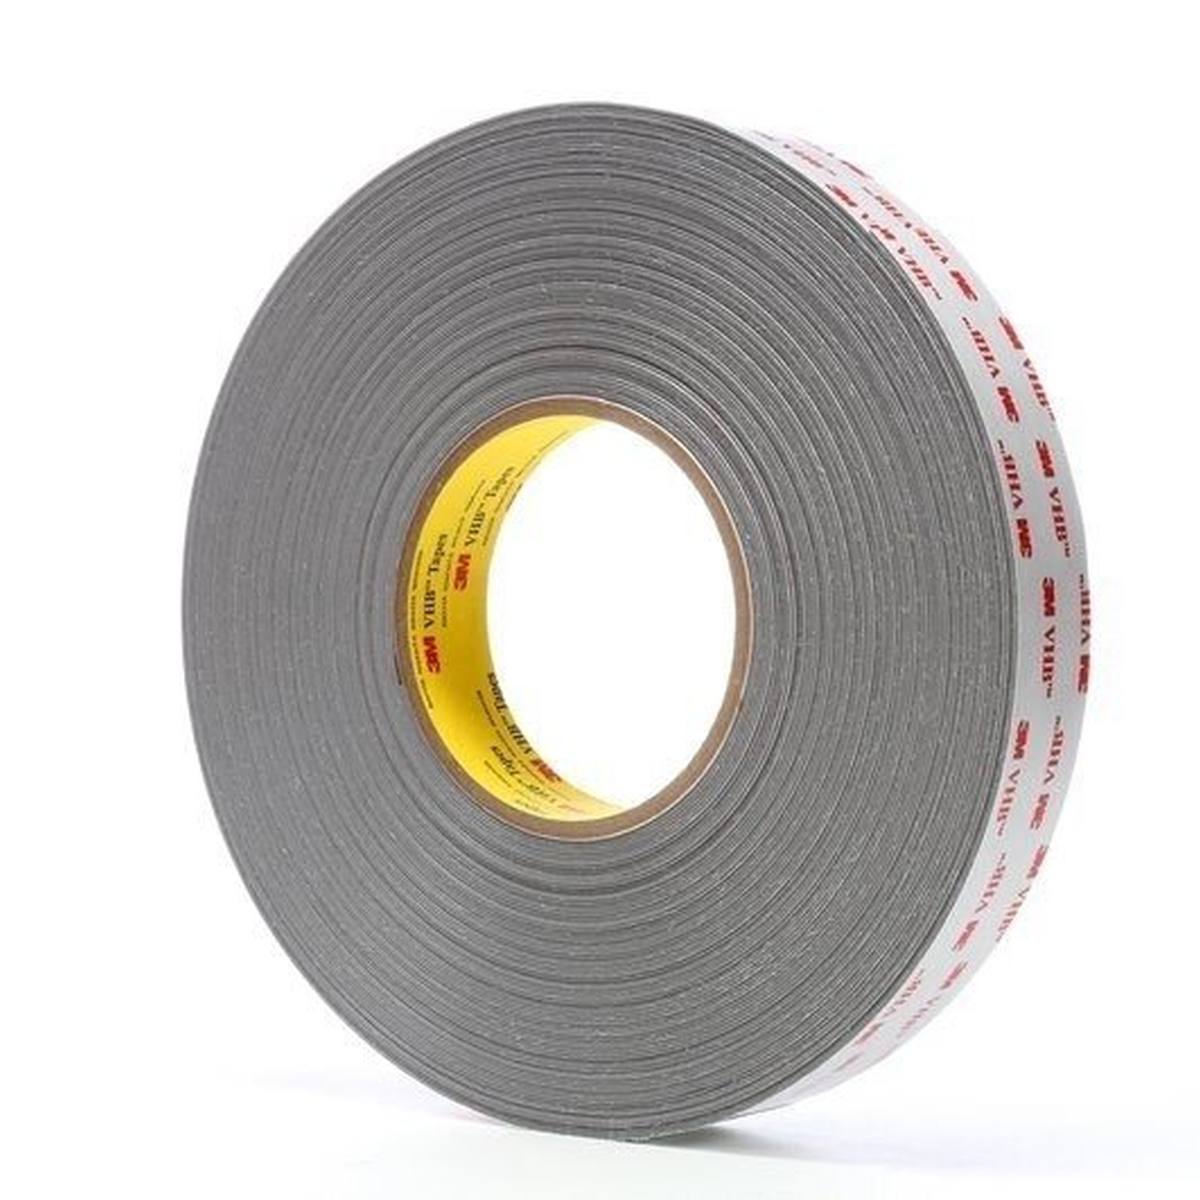 3M VHB adhesive tape RP 16P, gray, 6 mm x 66 m, 0.4 mm